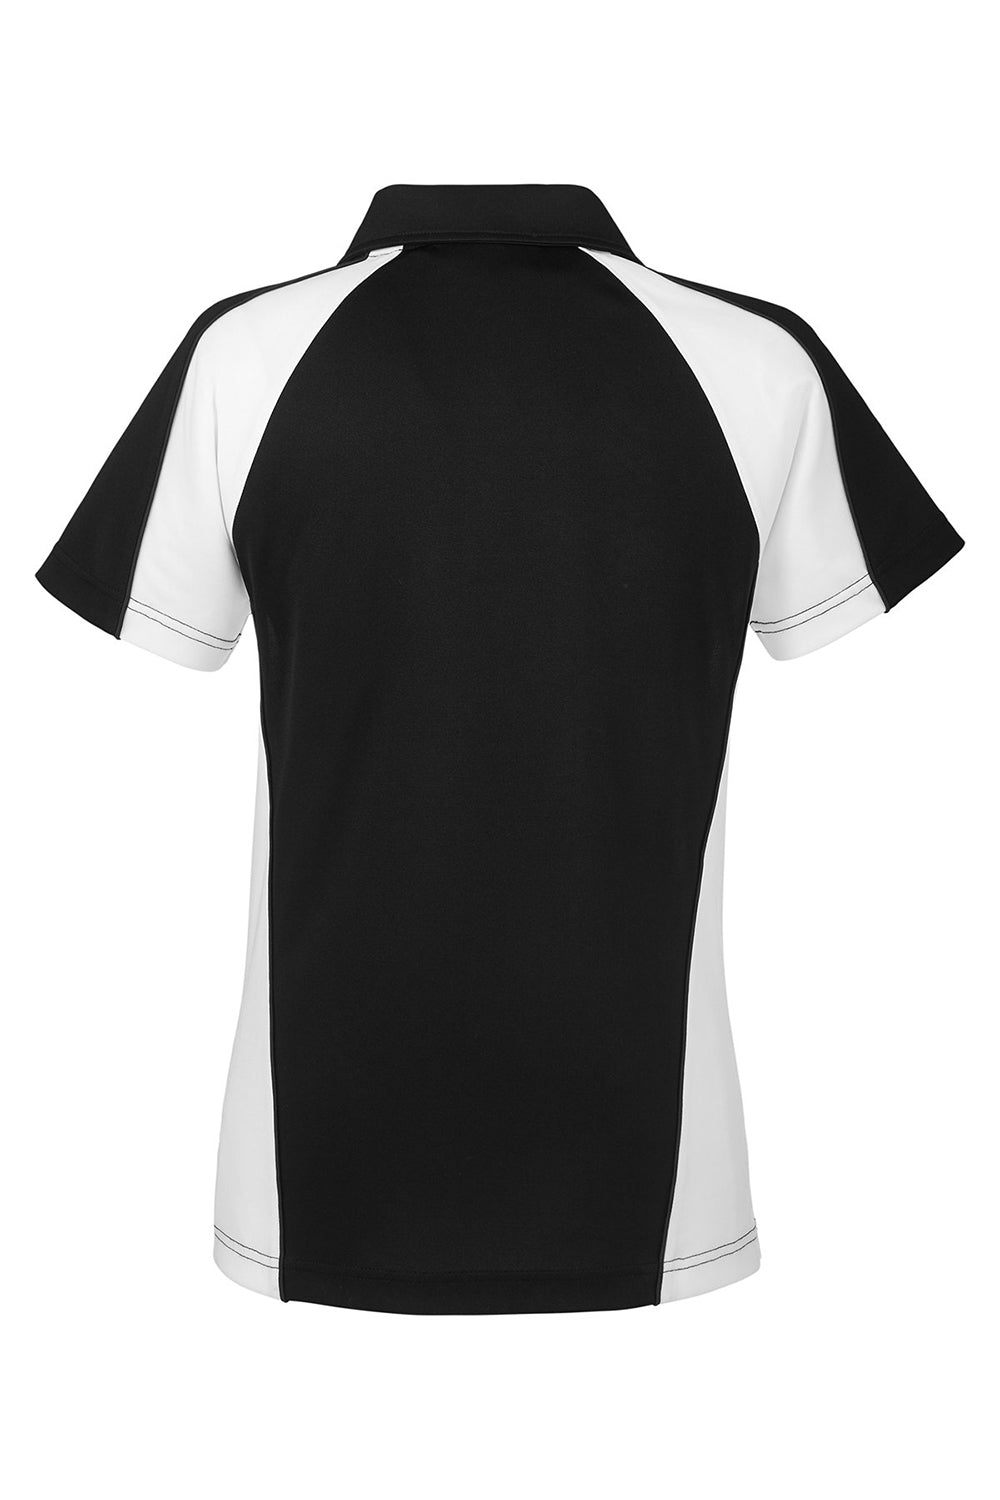 Harriton M385W Womens Advantage Performance Moisture Wicking Colorblock Short Sleeve Polo Shirt Black/White Flat Back